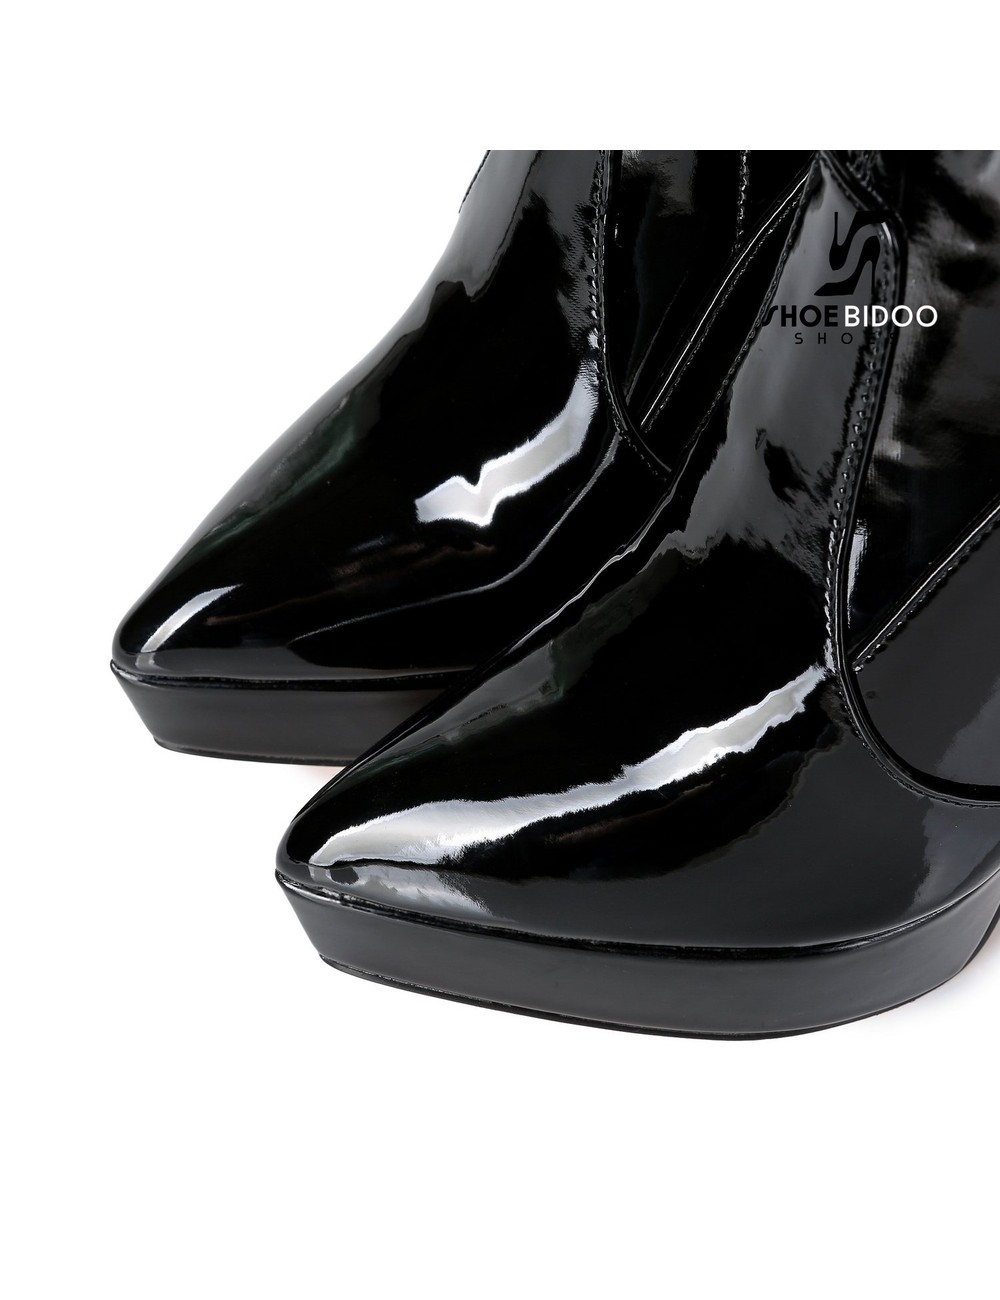 Giaro Giaro Platform Stiefel SPIRE in schwarz lack